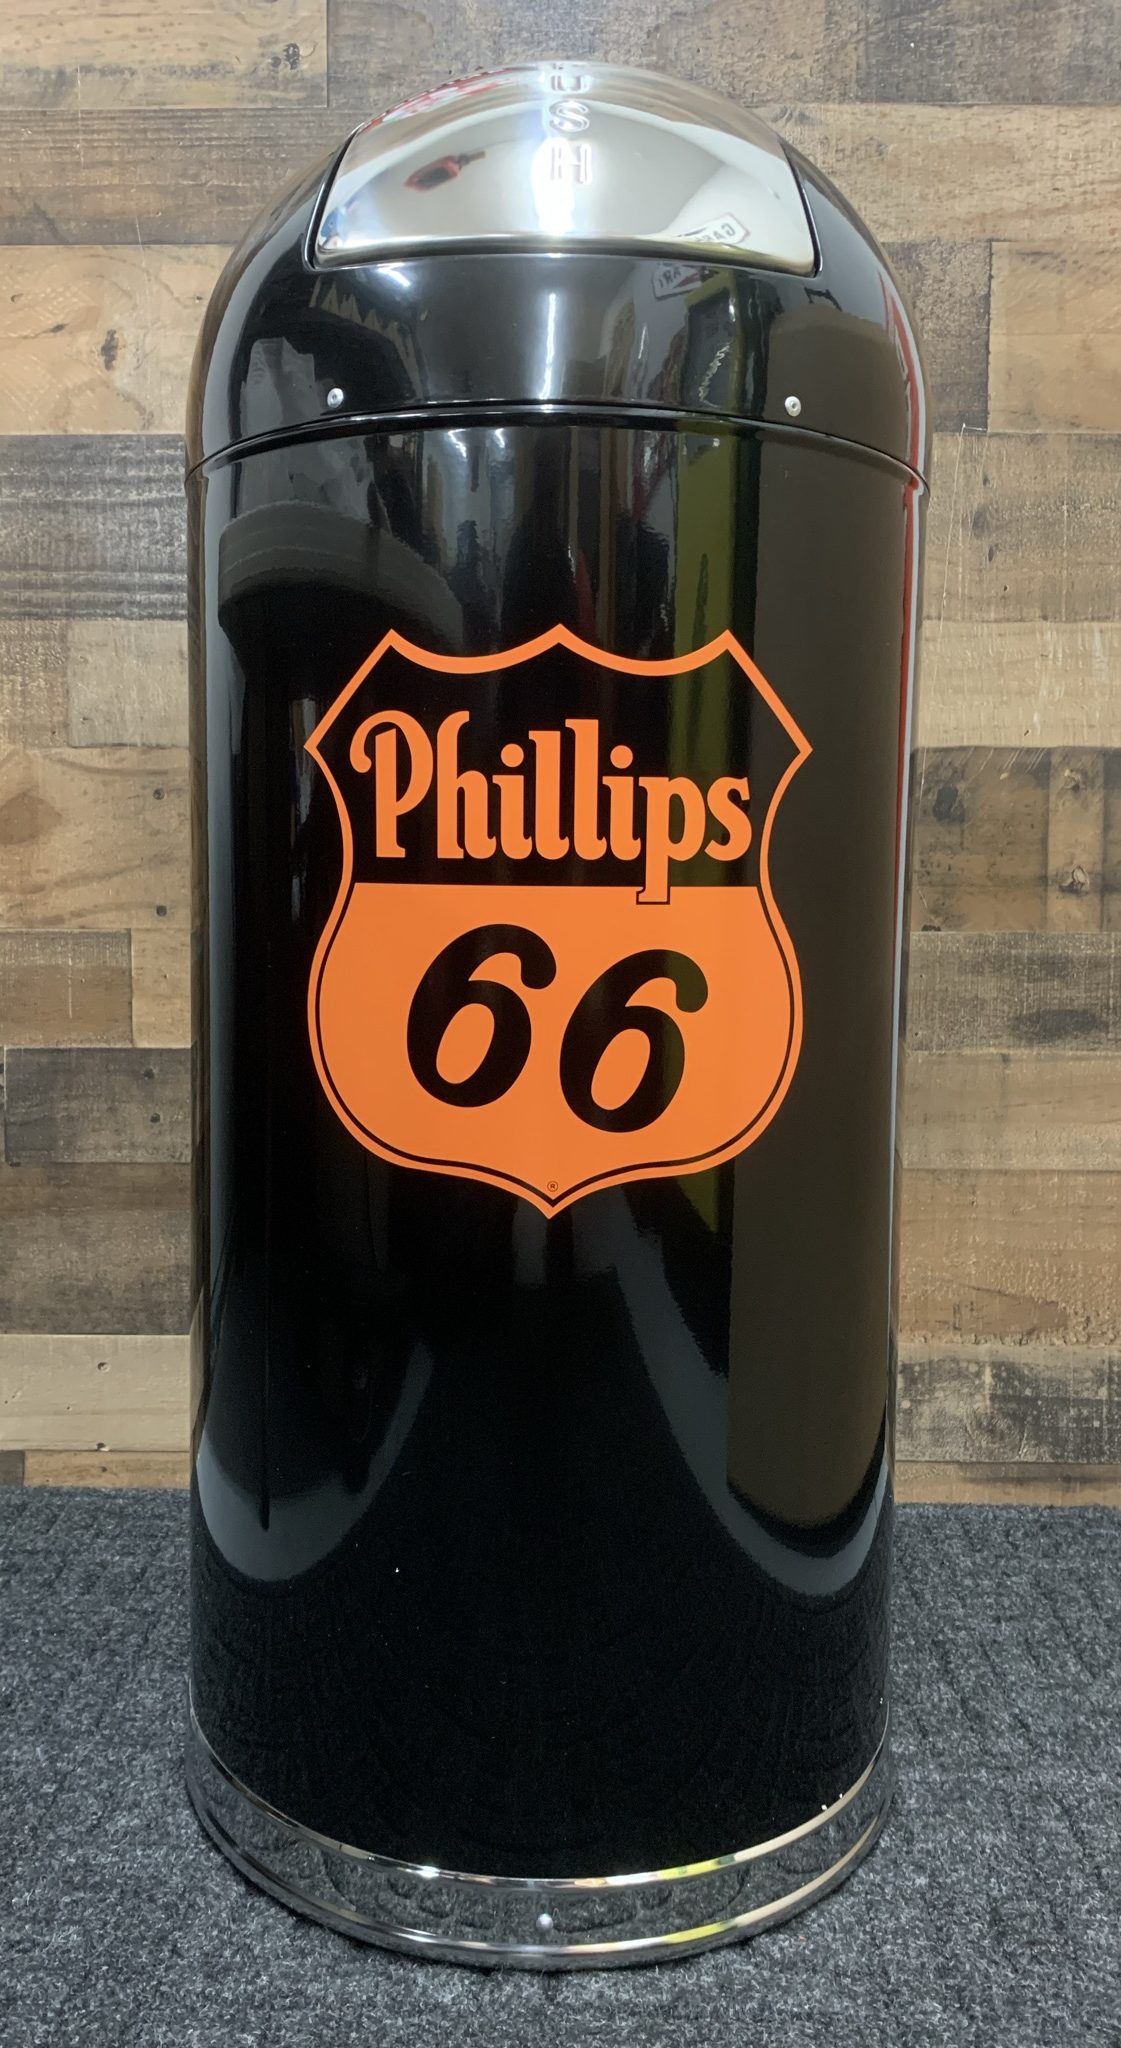 Phillips 66 Retro Style Trash Can